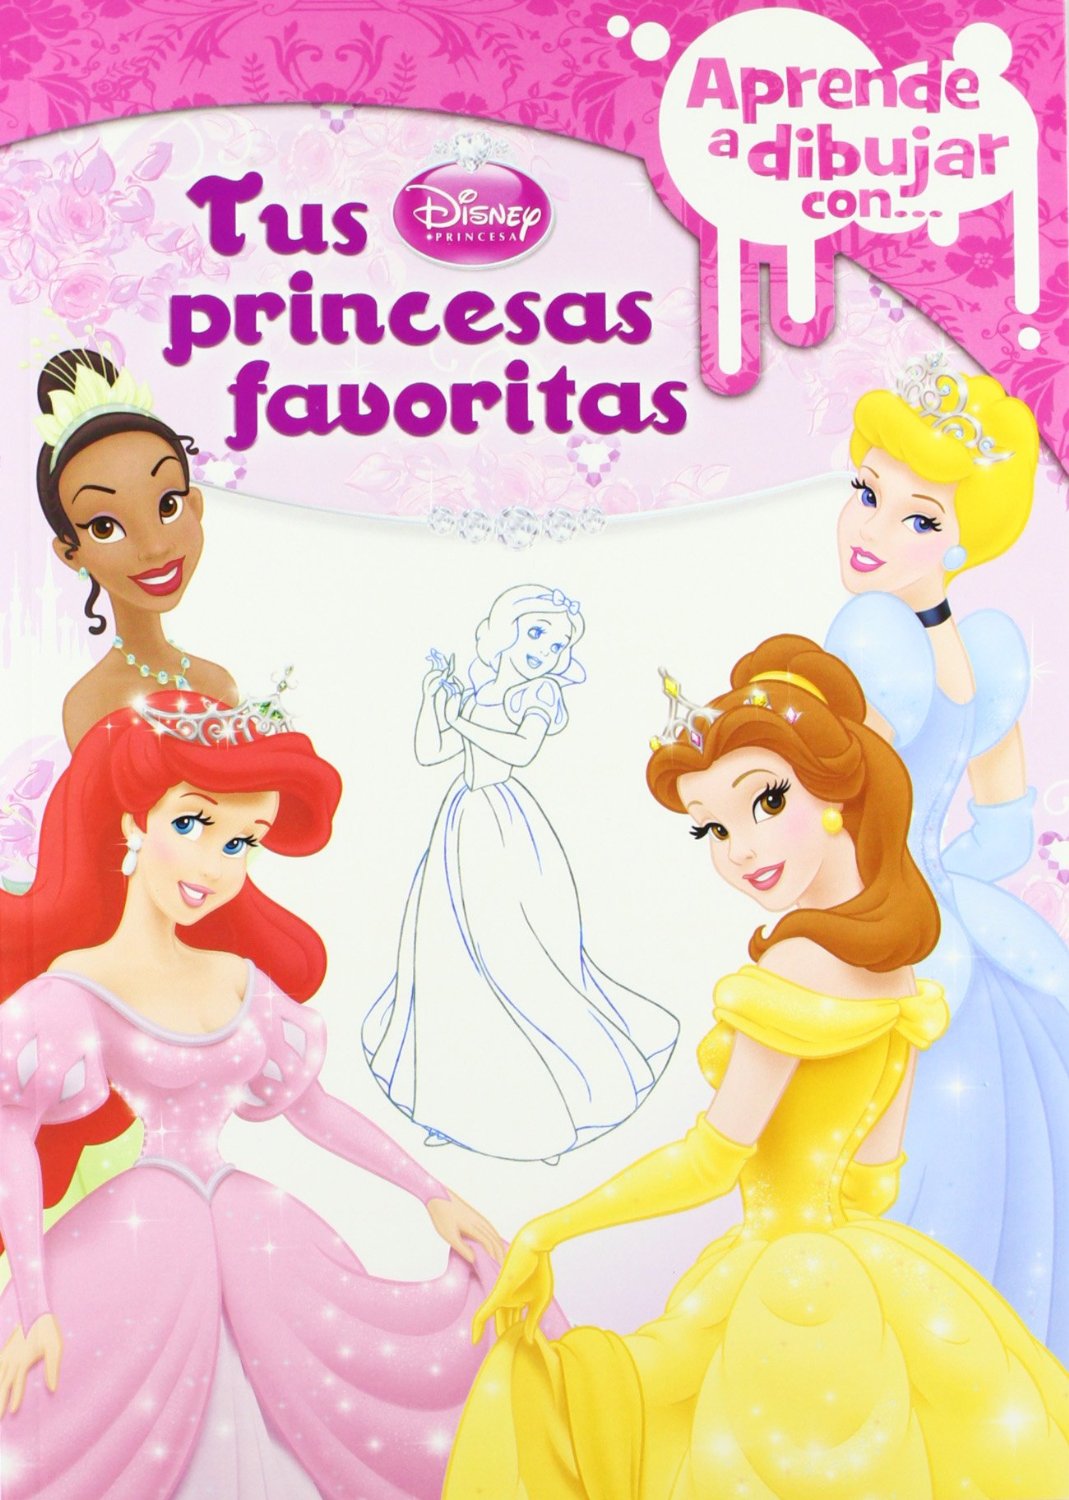 Libro: Aprende a dibujar con tus princesas favoritas - Tus Princesas Disney